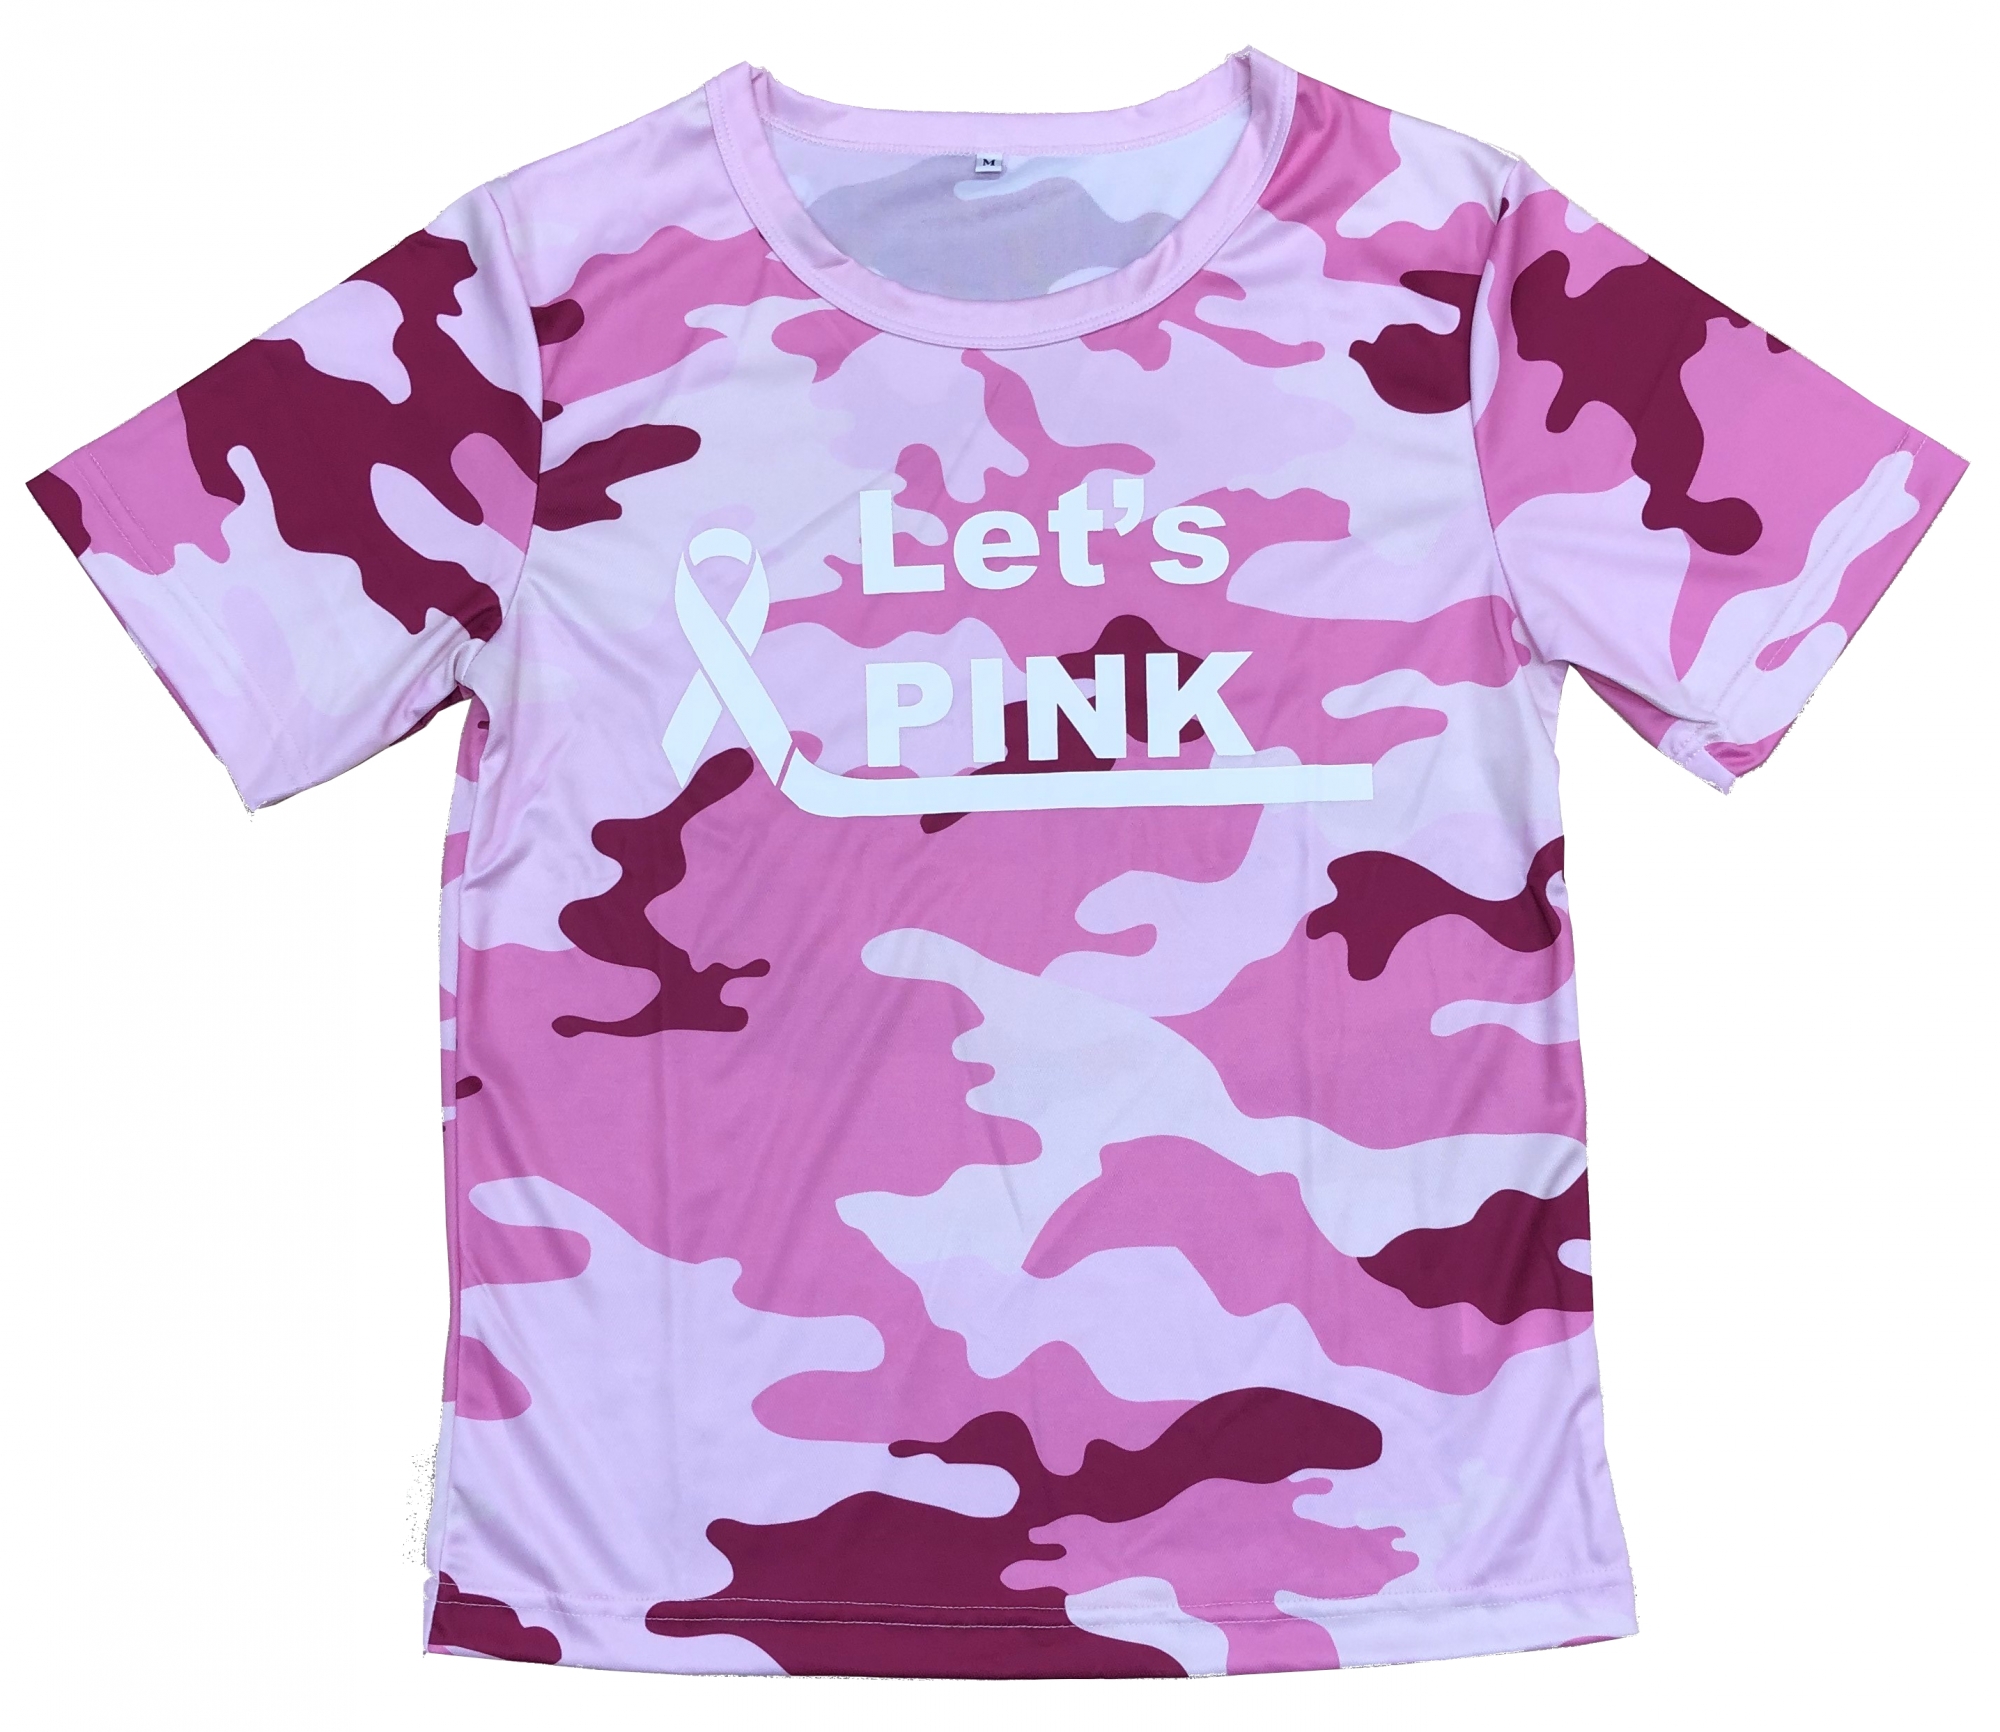 Self Photos / Files - Lets Pink T-shirt 2